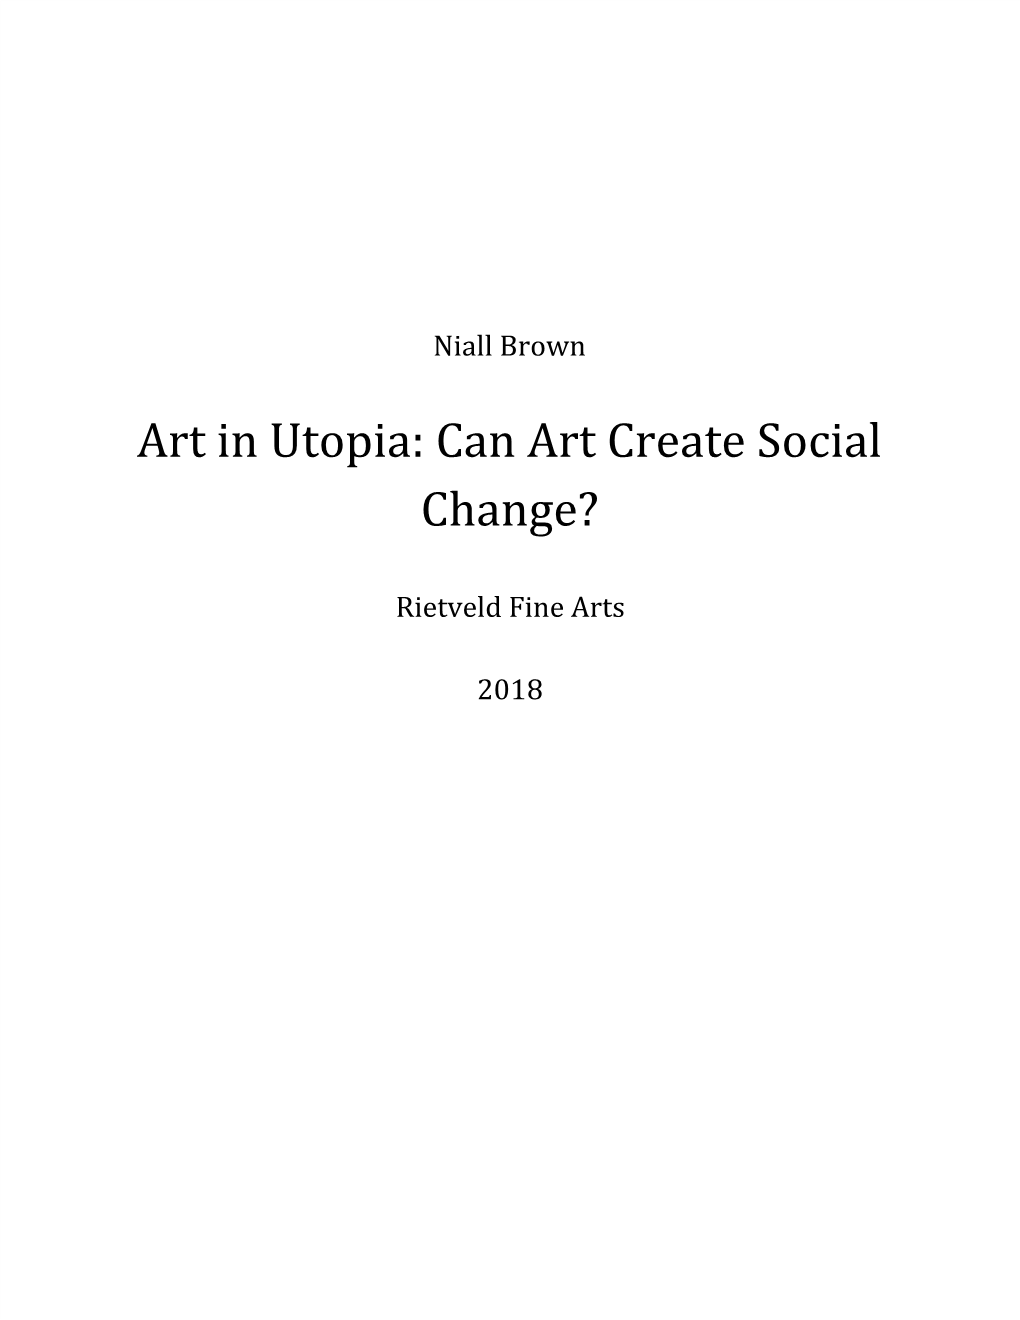 Art in Utopia: Can Art Create Social Change?